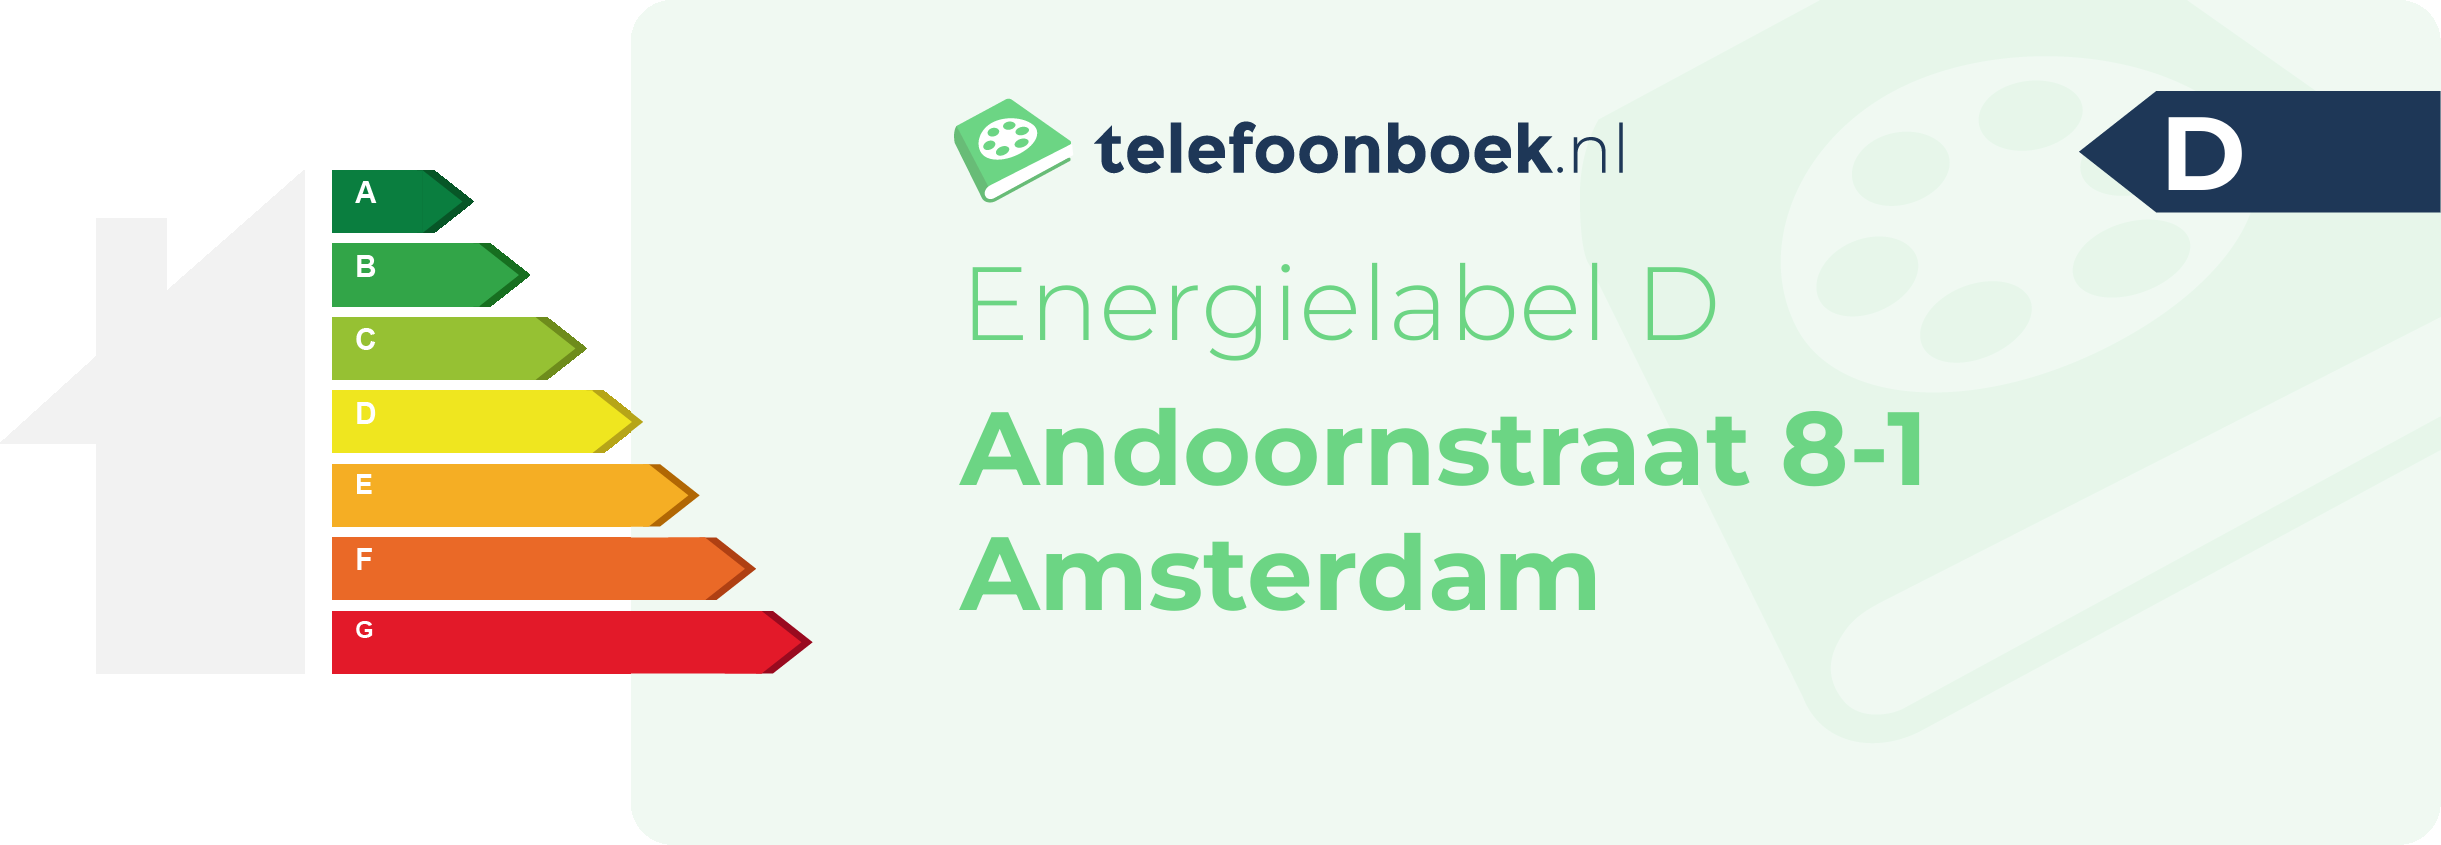 Energielabel Andoornstraat 8-1 Amsterdam